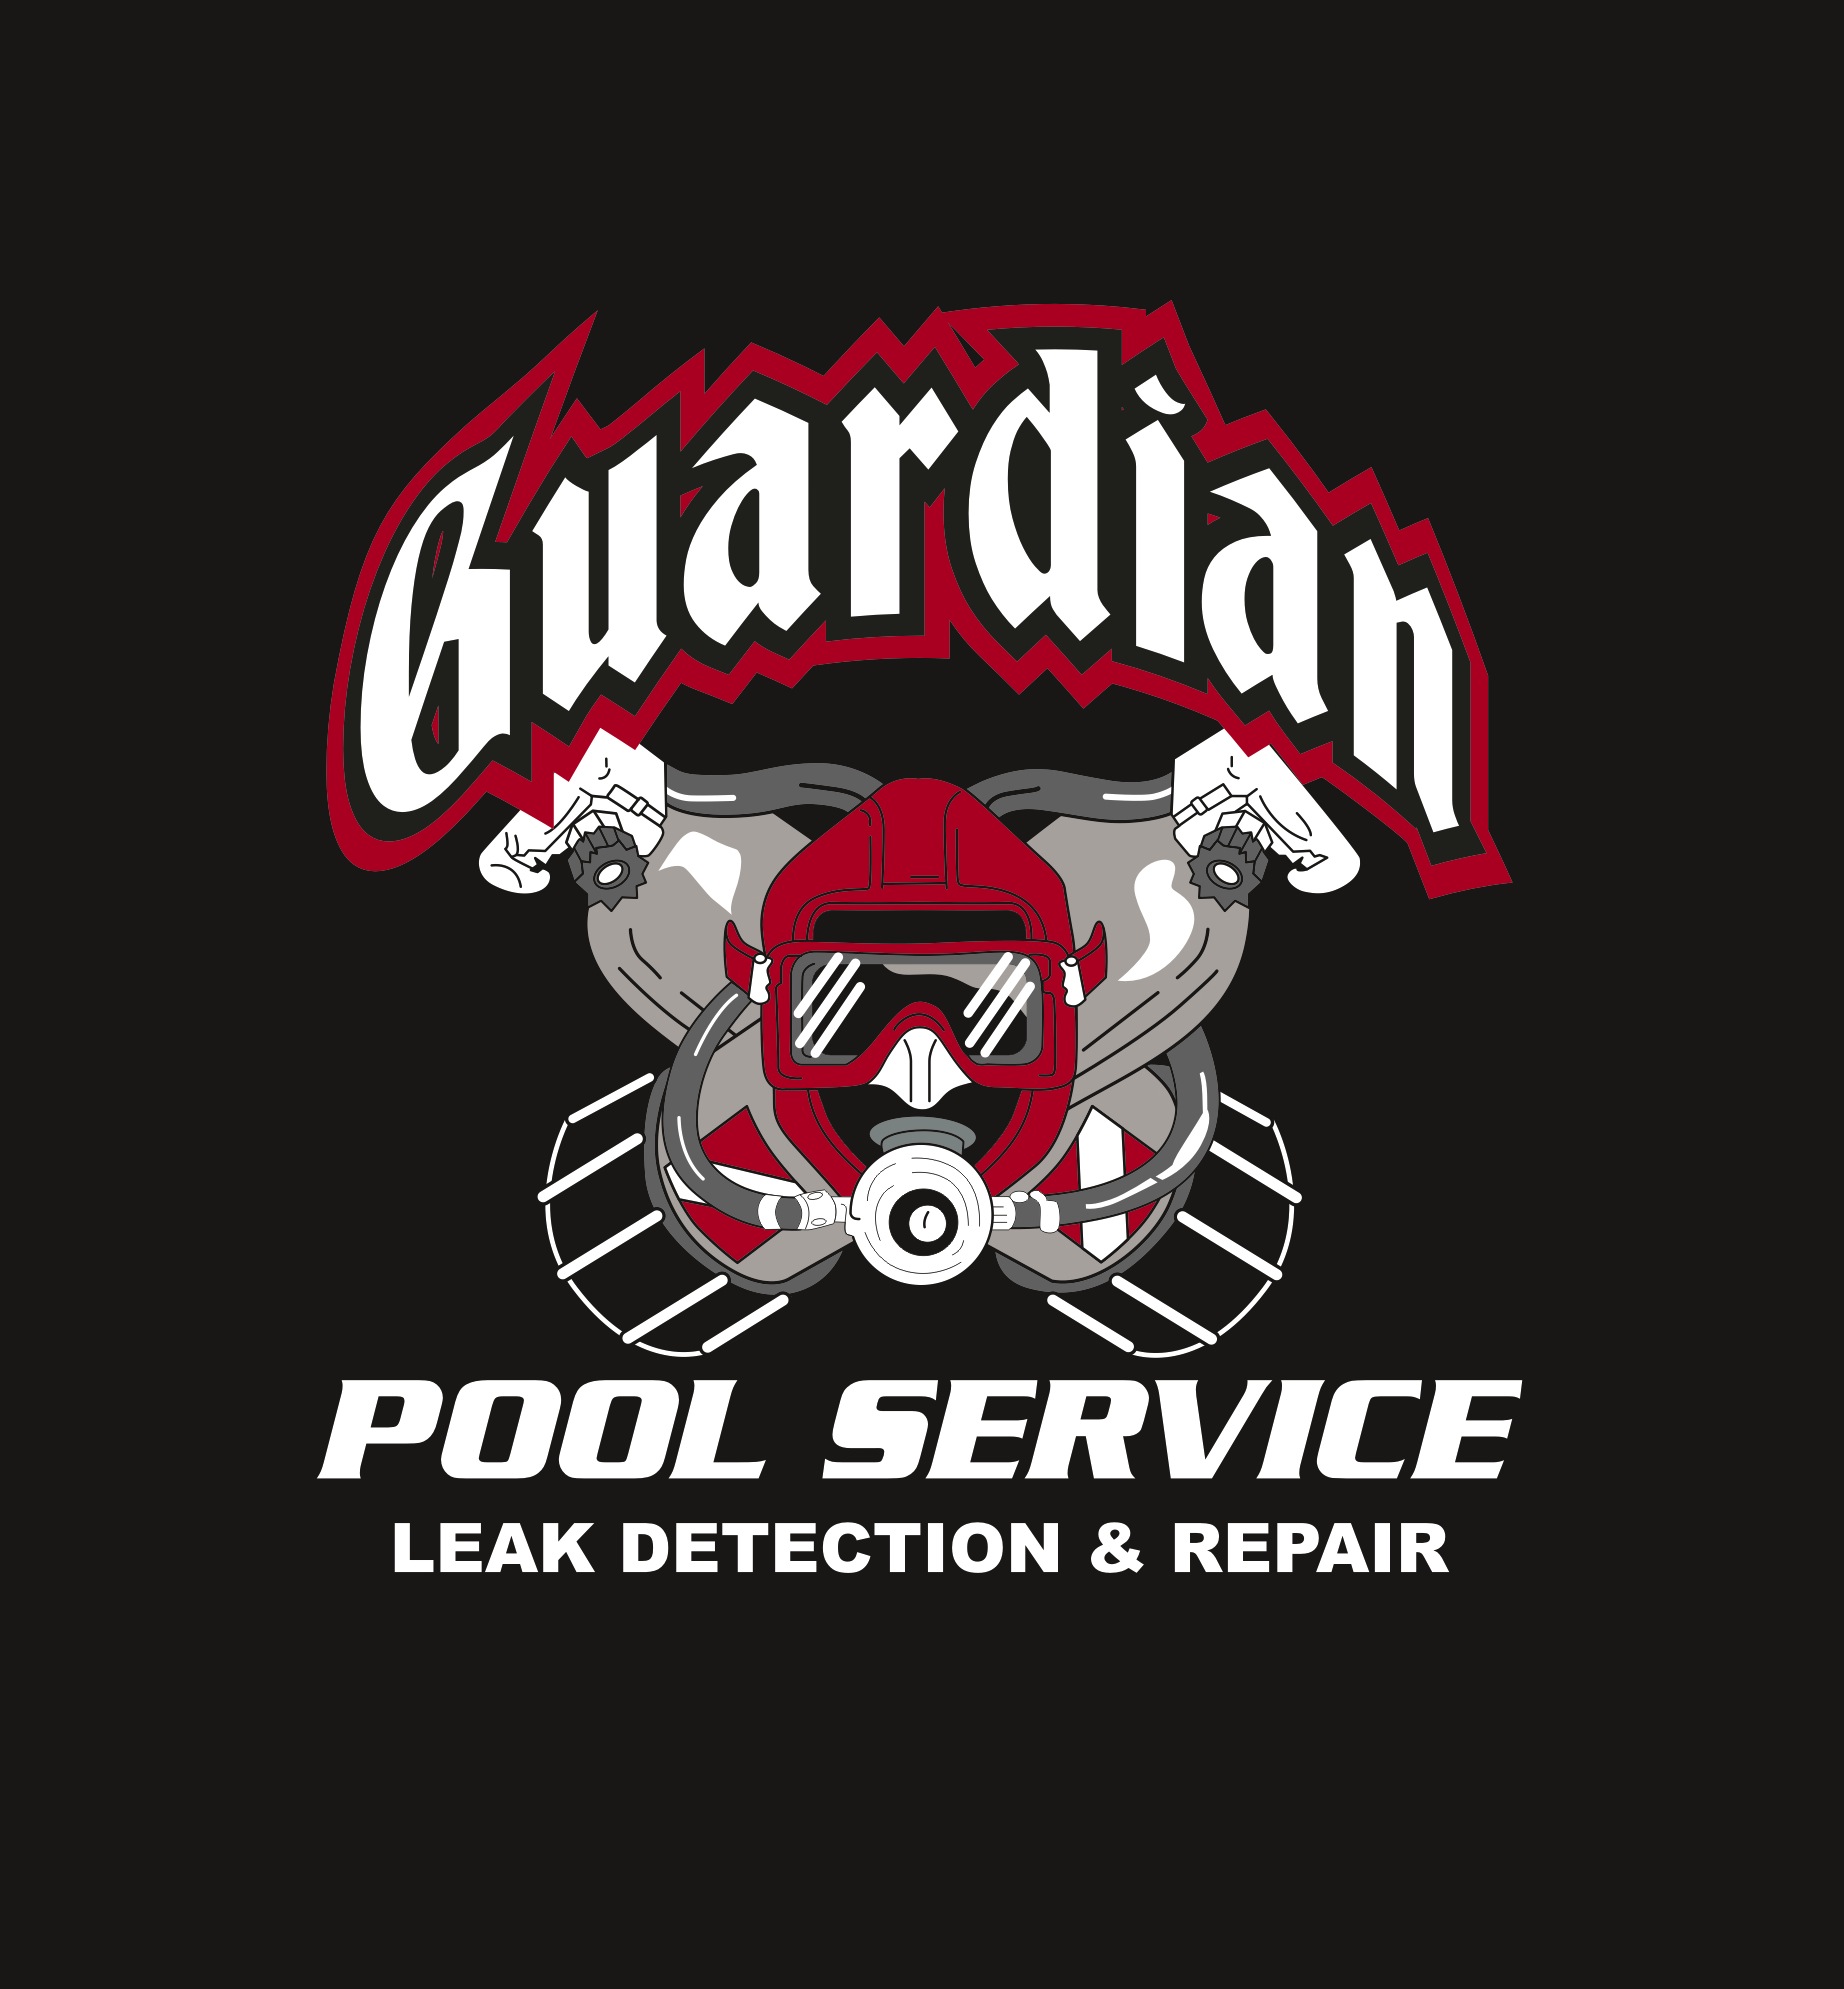 Guardian Pool Service